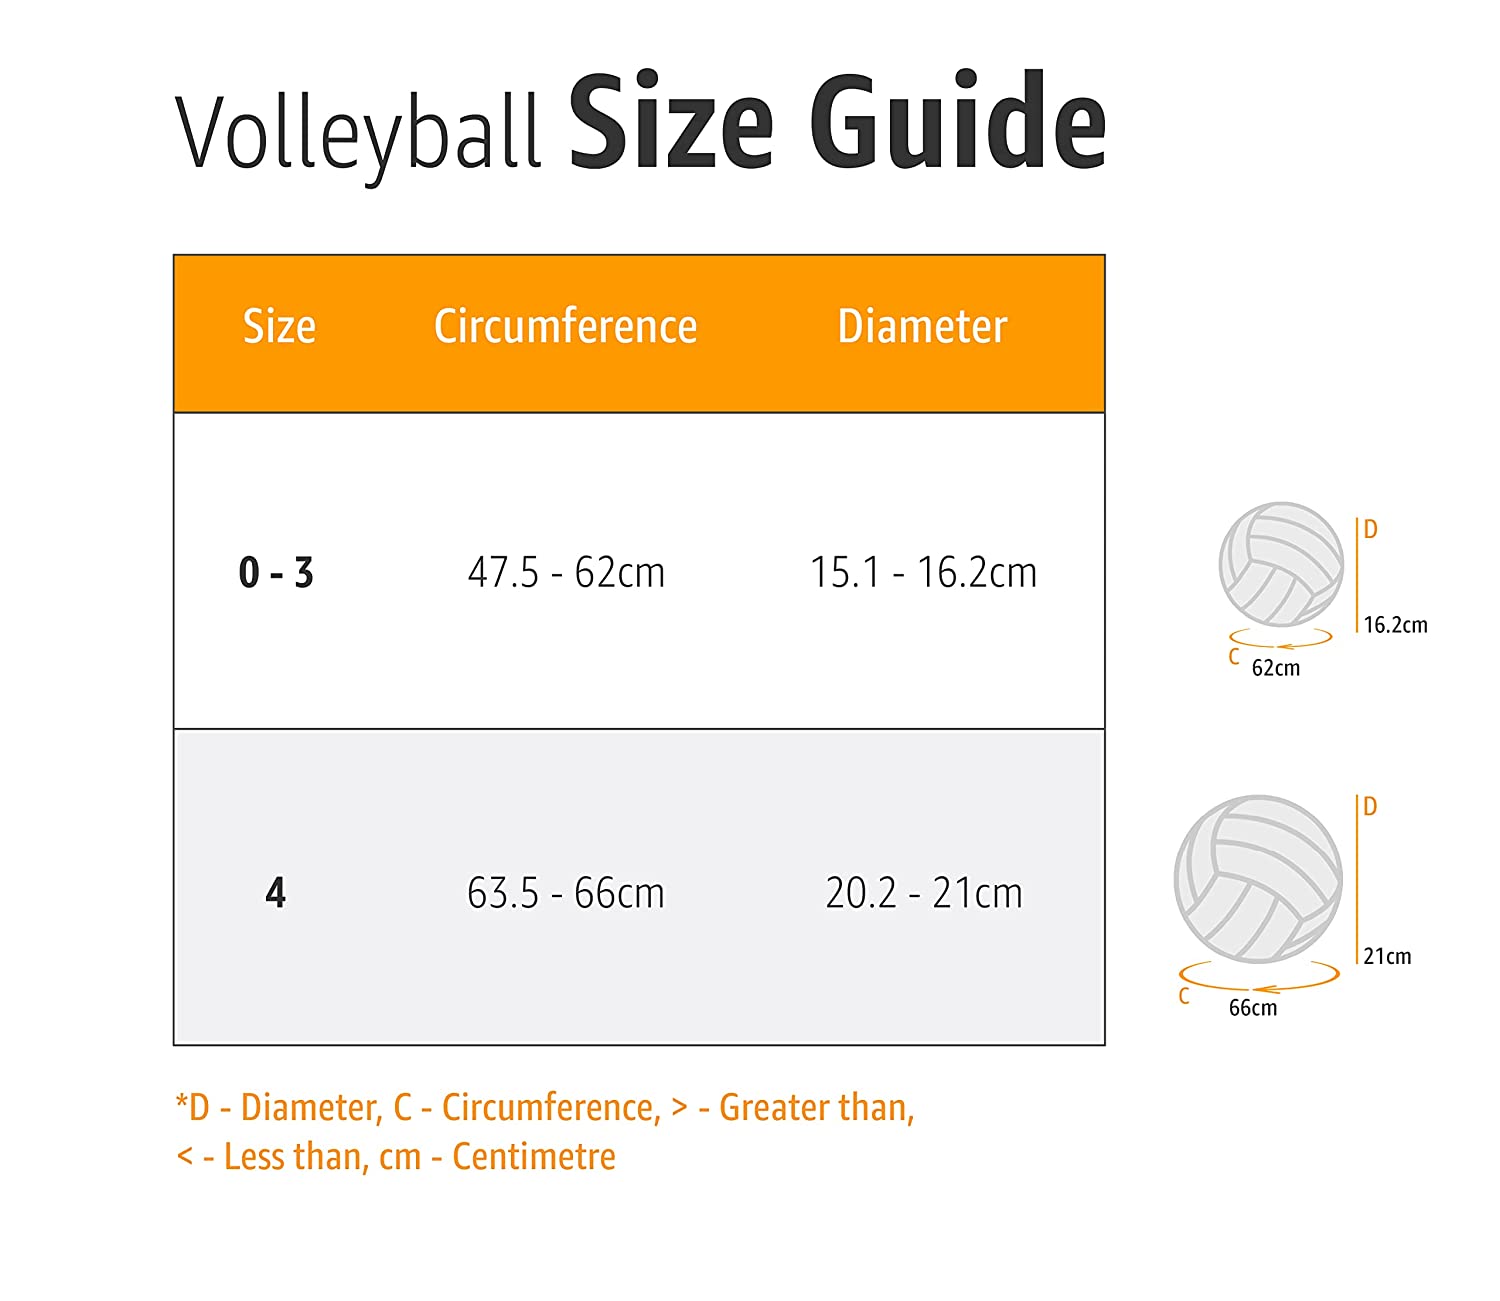 NIVIA Classic (H.S 32/P) Volleyball, Yellow/Blue - Size 4 - Best Price online Prokicksports.com